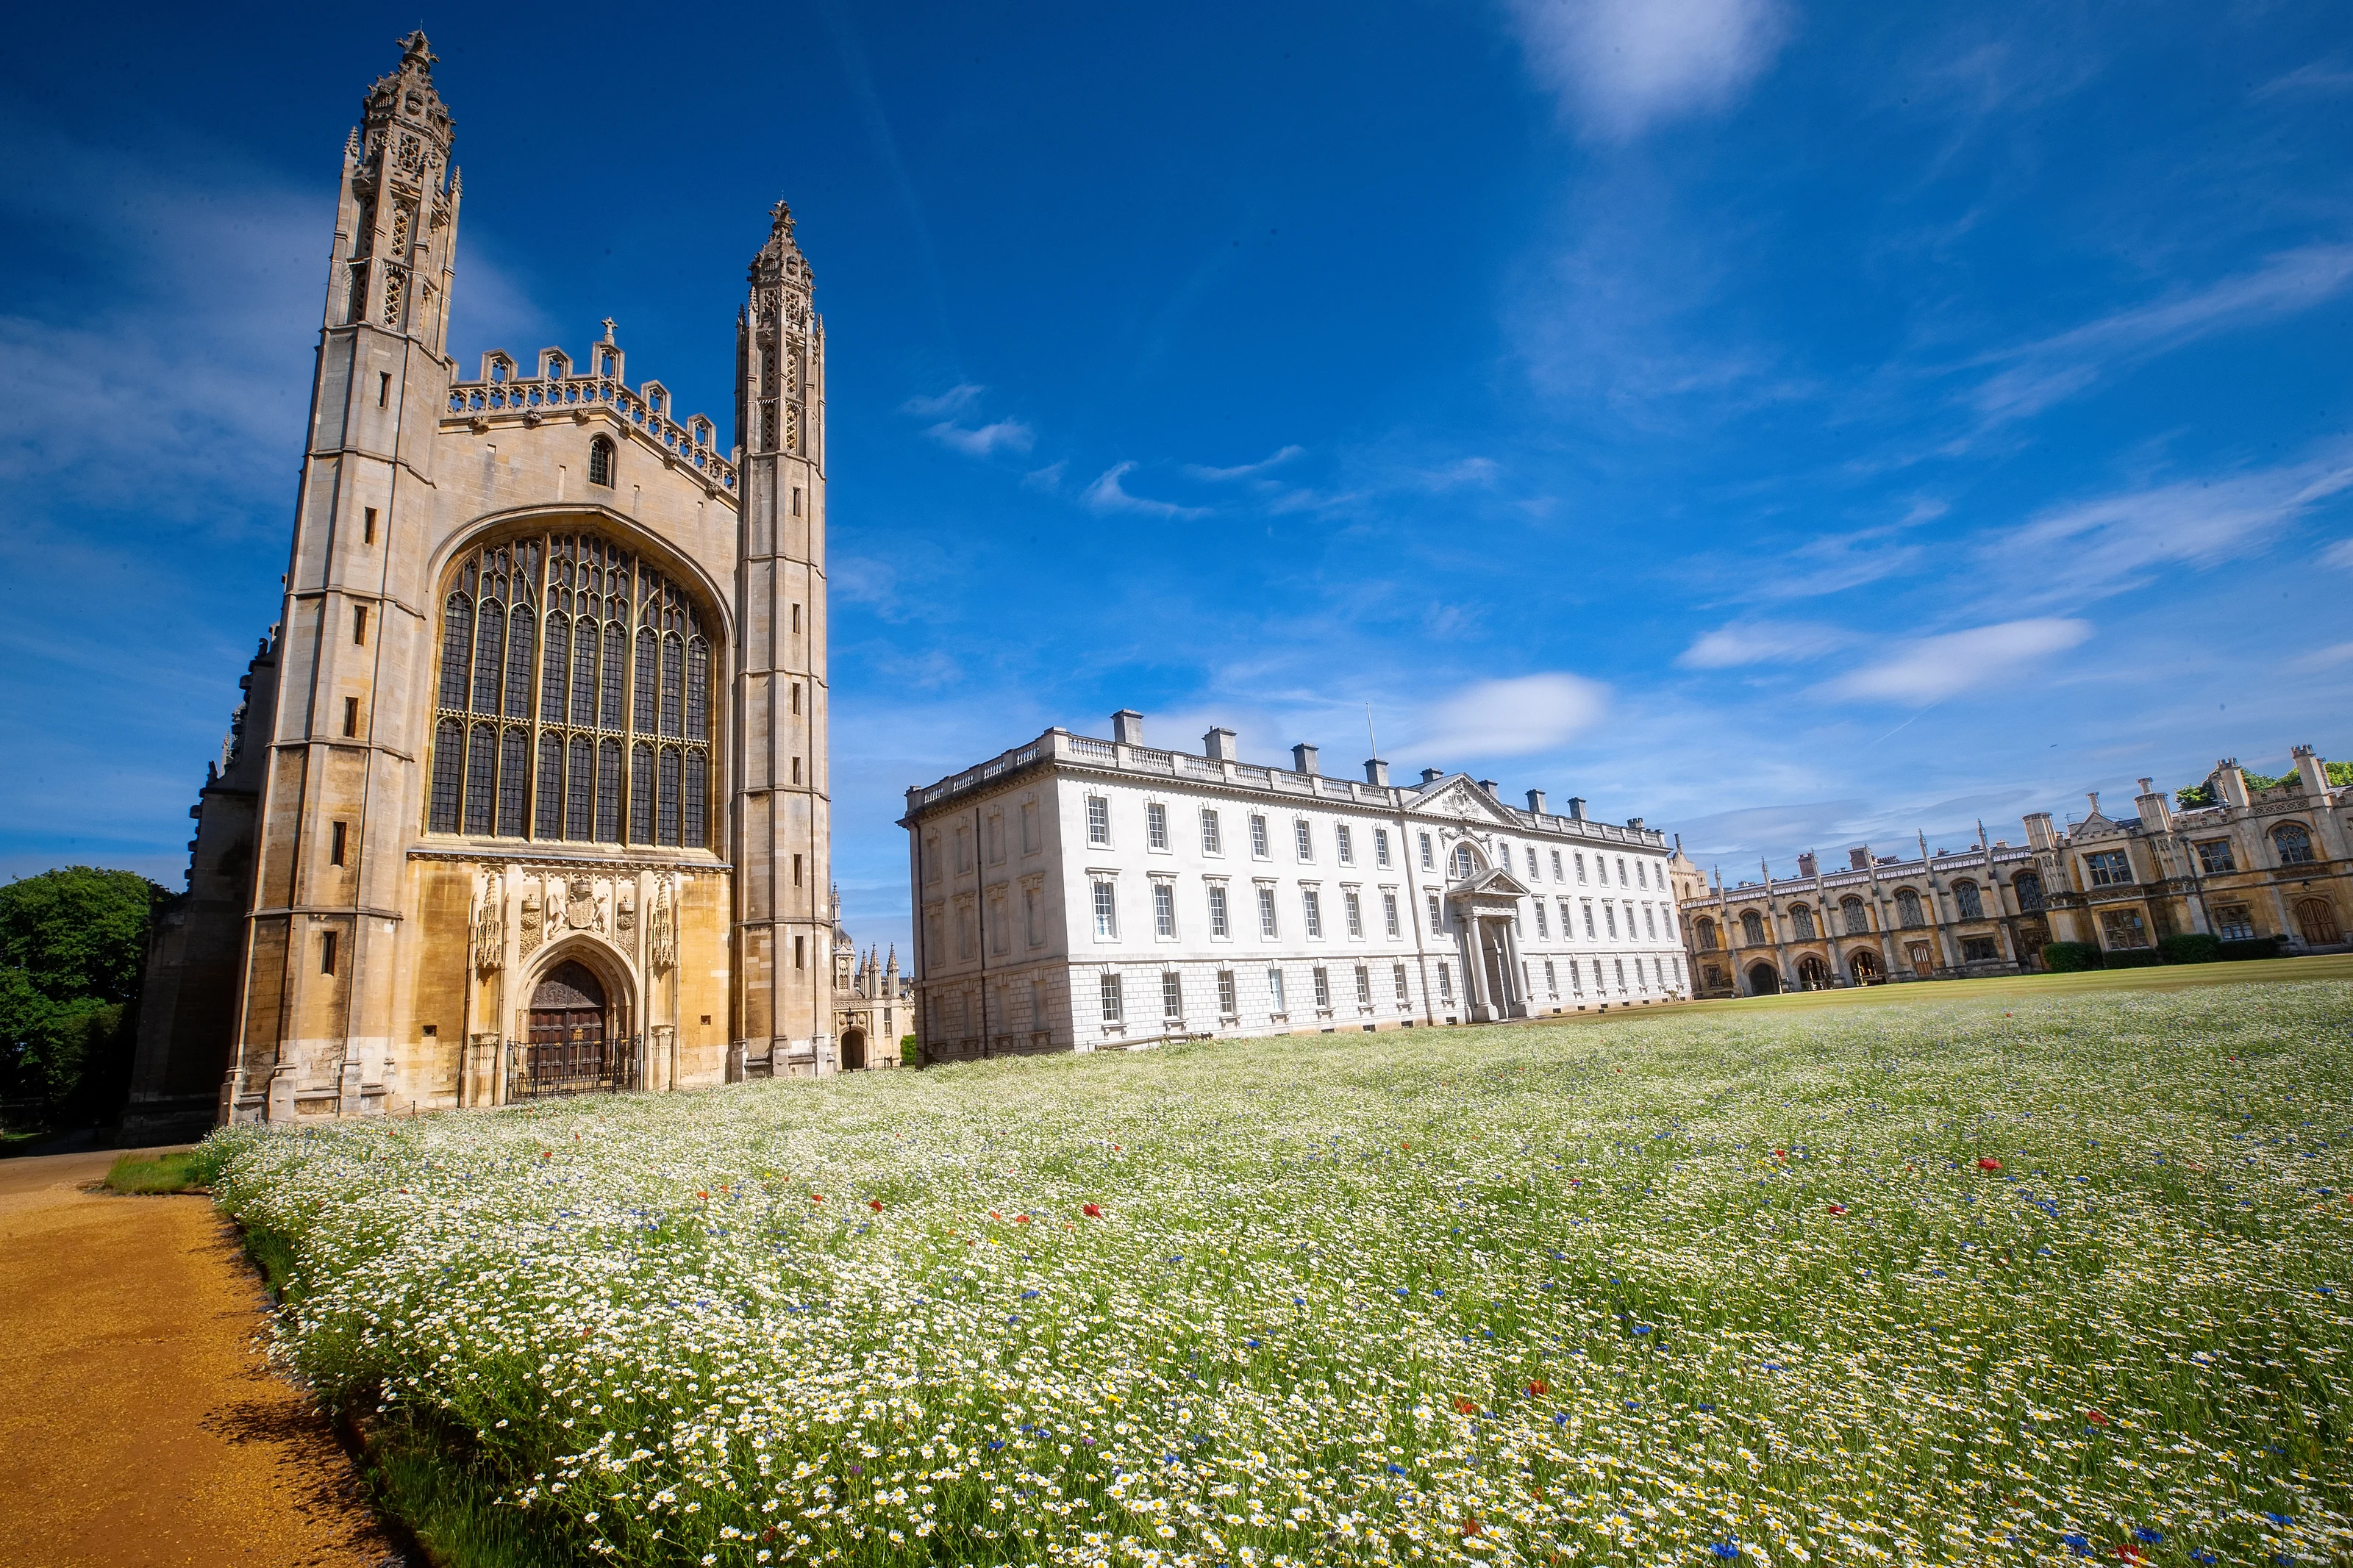 University of Cambridge - WildflowerMeadow2020 